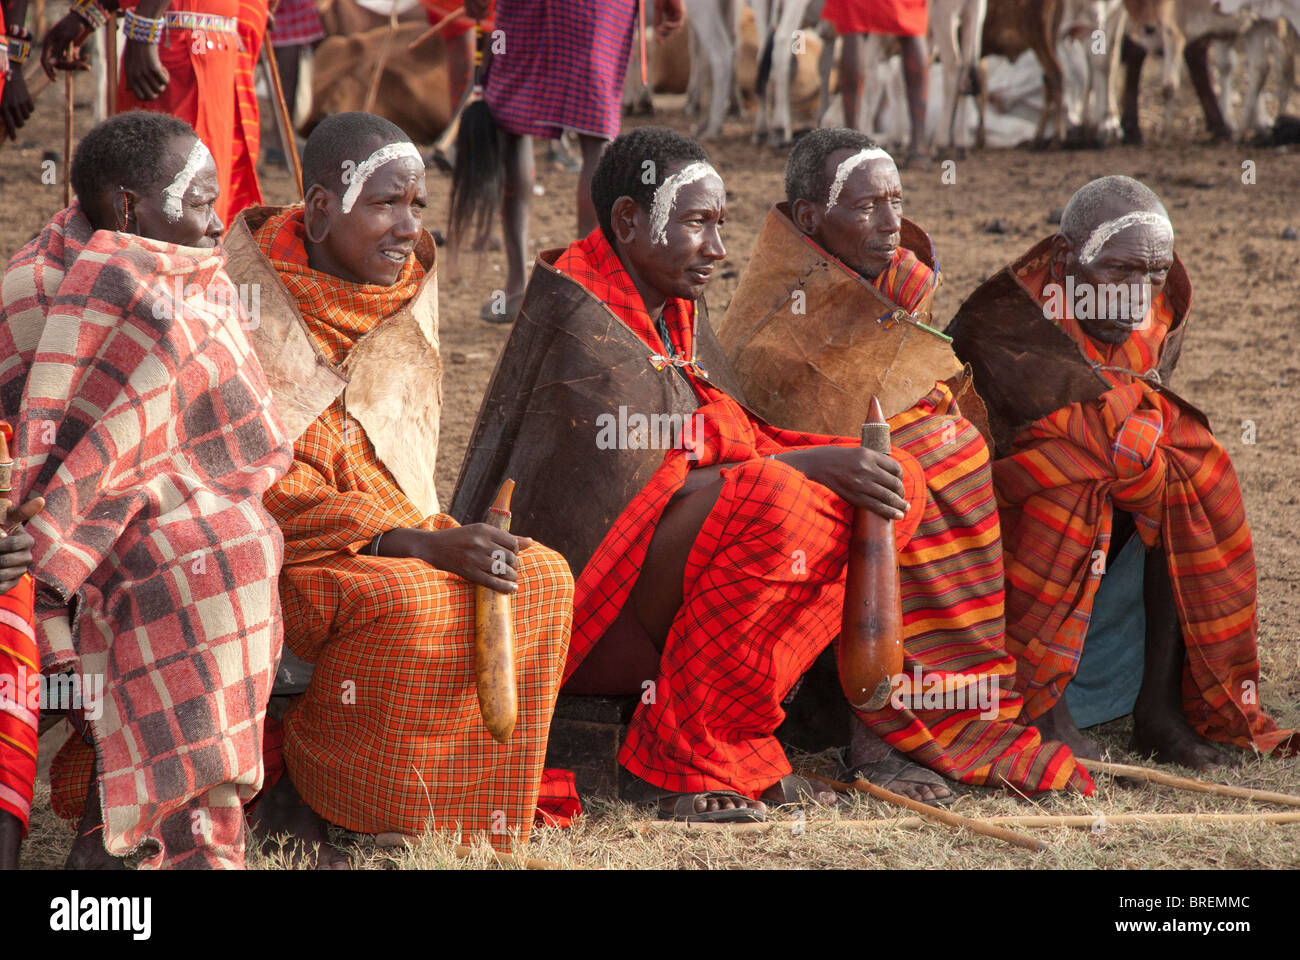 Masai village elders in traditional dress, Masai Mara, Kenya, Africa Stock Photo